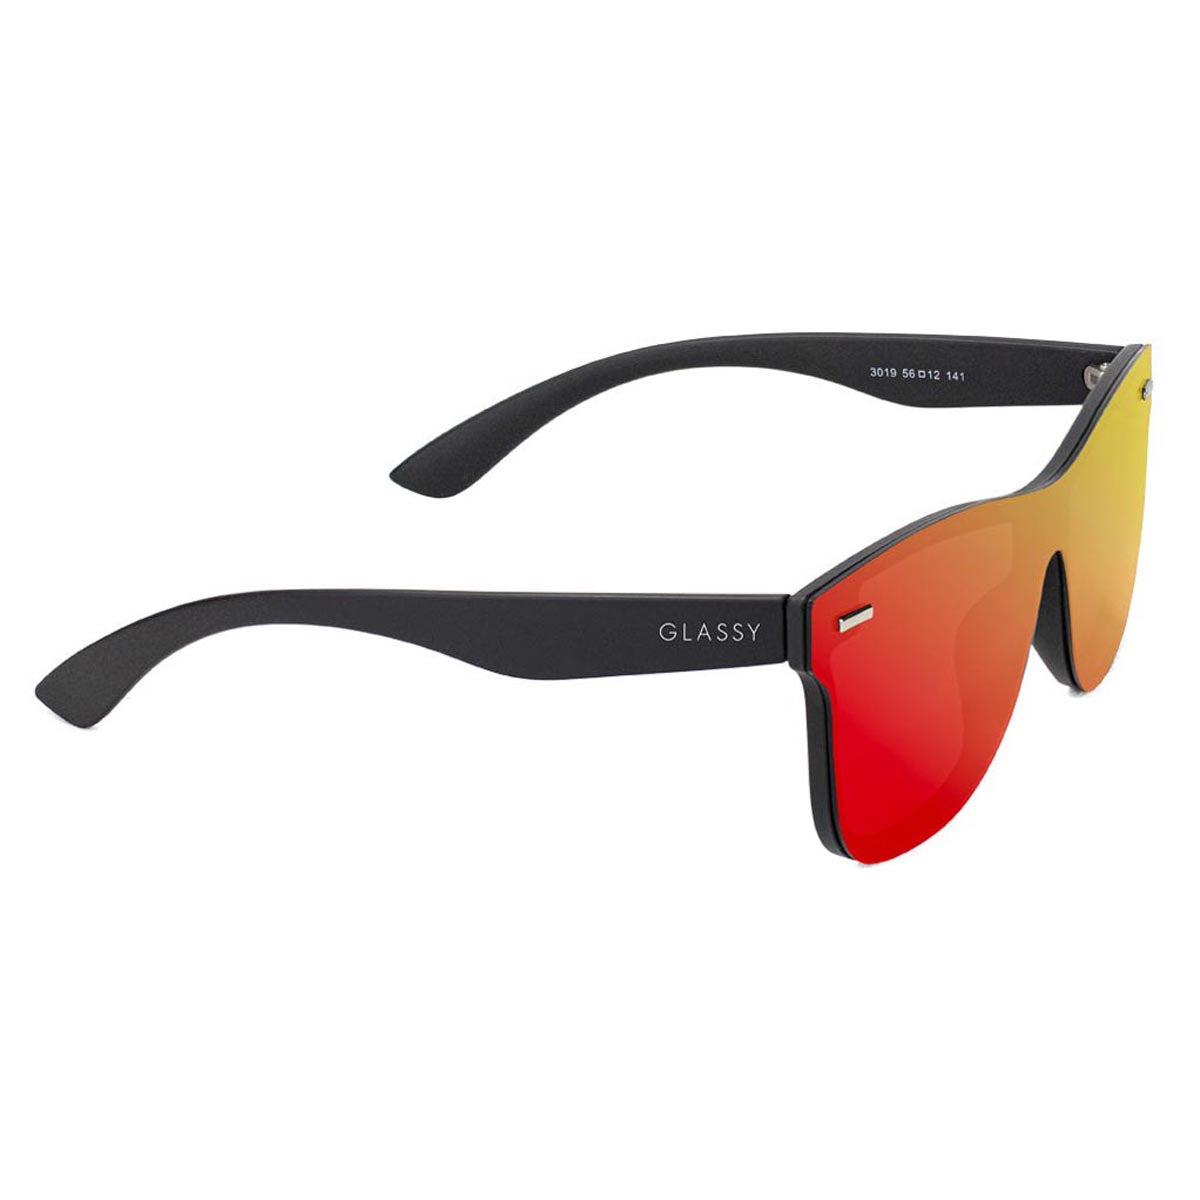 Glassy Leo Premium Sunglasses - Matte Black/Red Mirror image 2